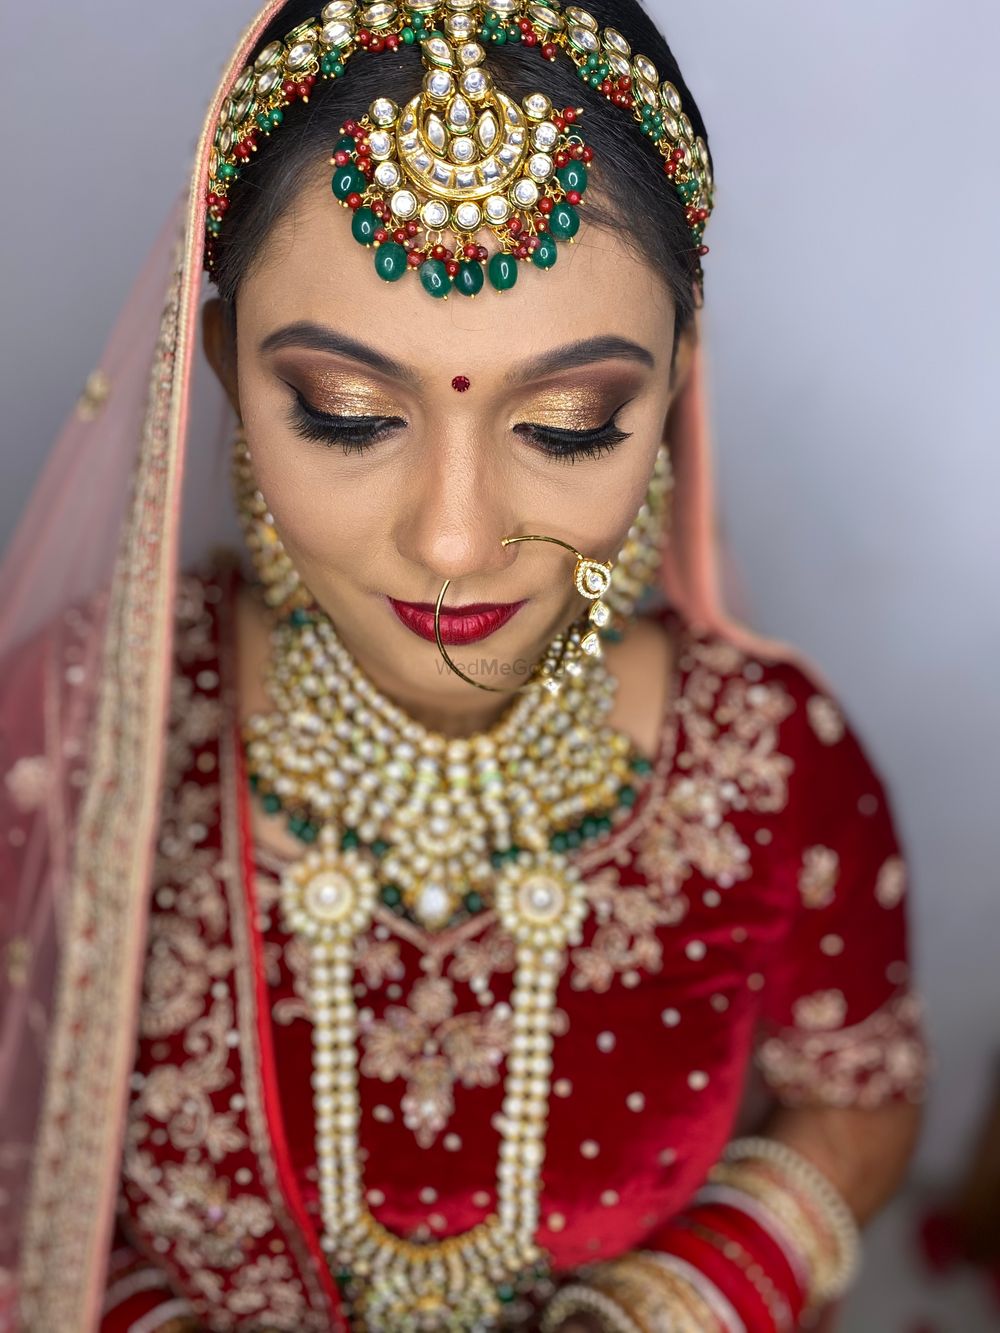 Photo By Manisha Bridal Avenue - Bridal Makeup